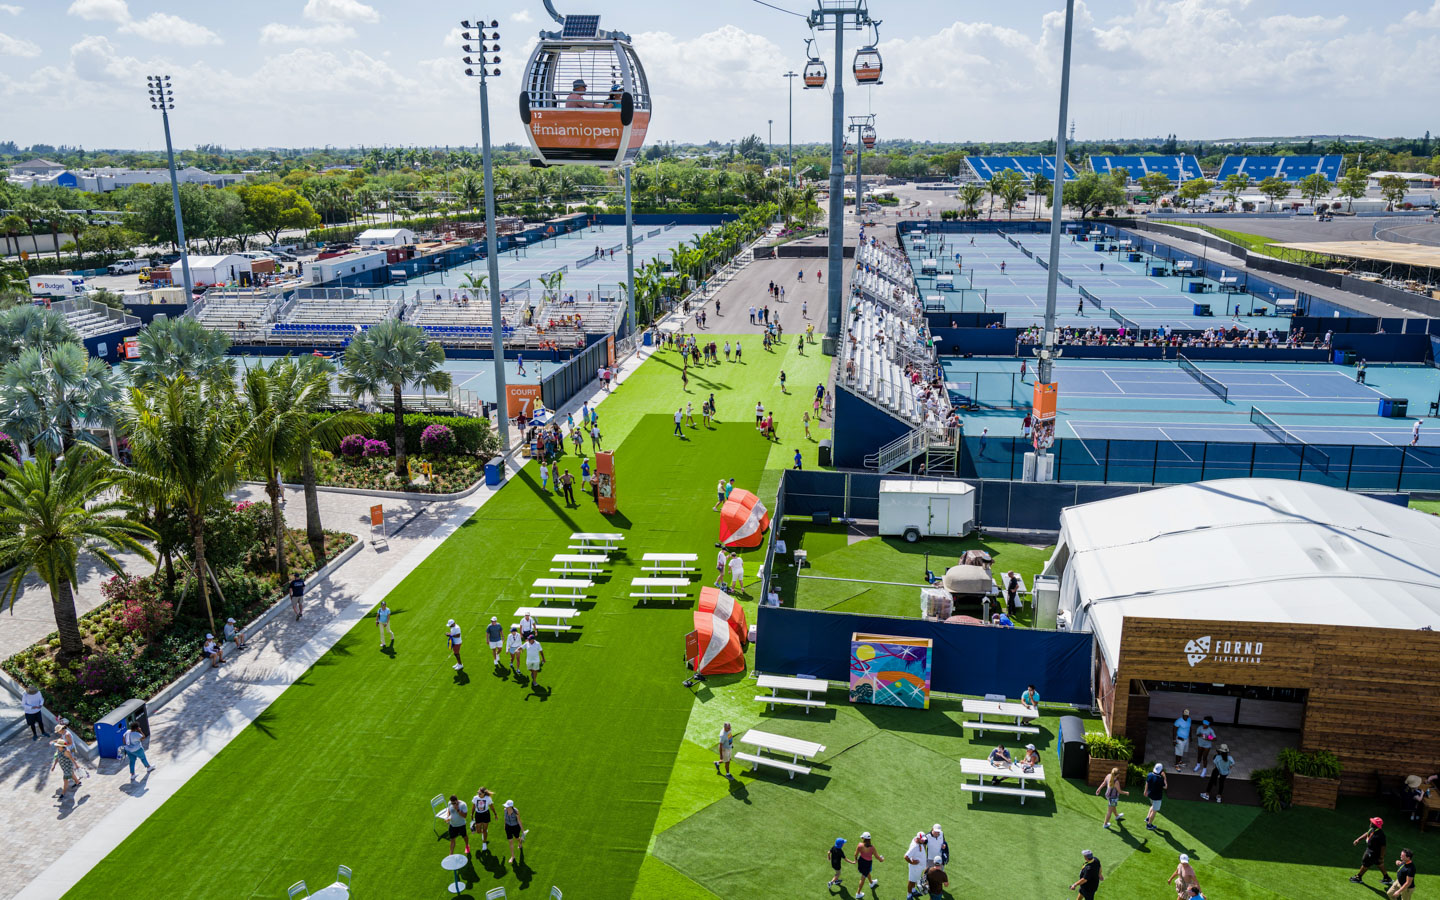 Miami Open 2024 Tennis Tournament Schedule